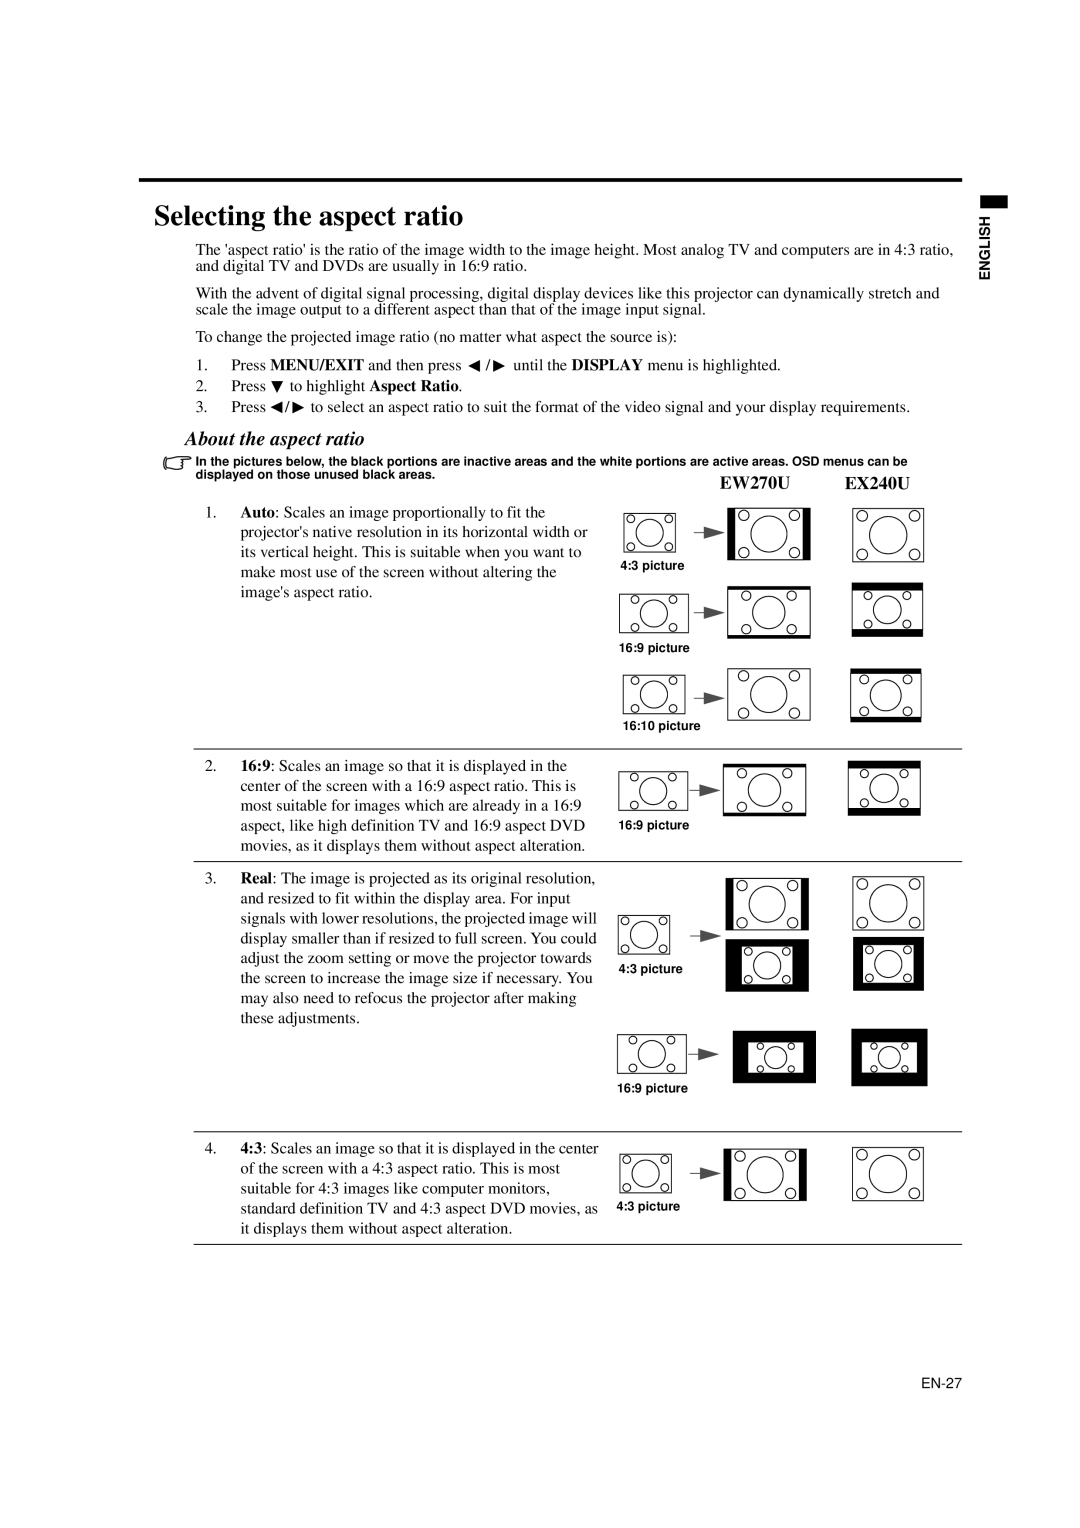 Mitsubishi Electronics EW270U user manual Selecting the aspect ratio, About the aspect ratio, EX240U 